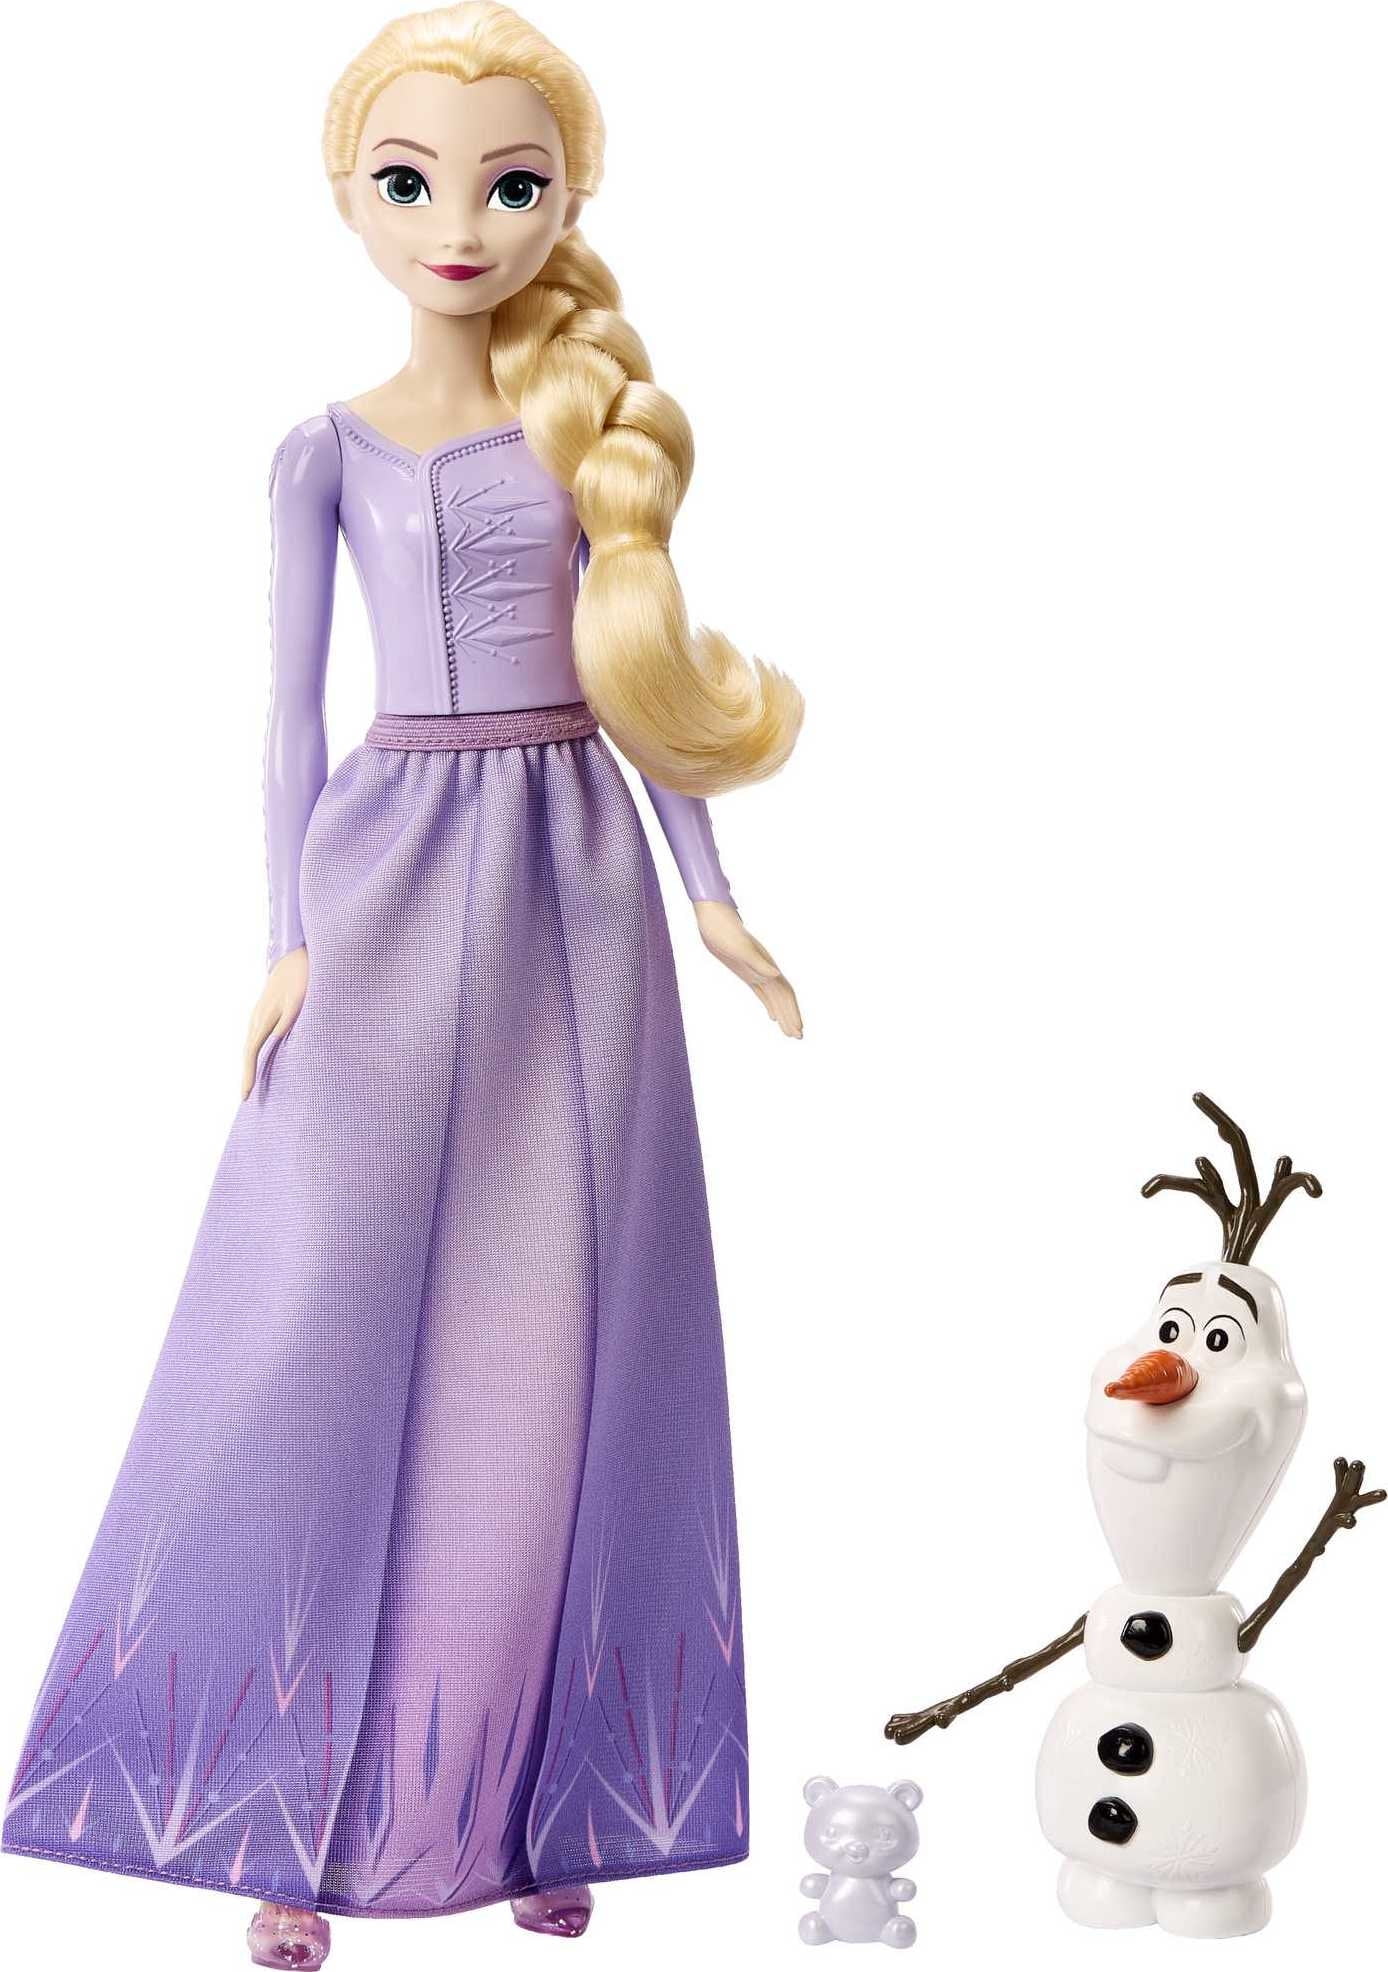 Disney Frozen Arendelle Elsa Small Doll, Olaf Snowman Figure & Ice Bear Accessory